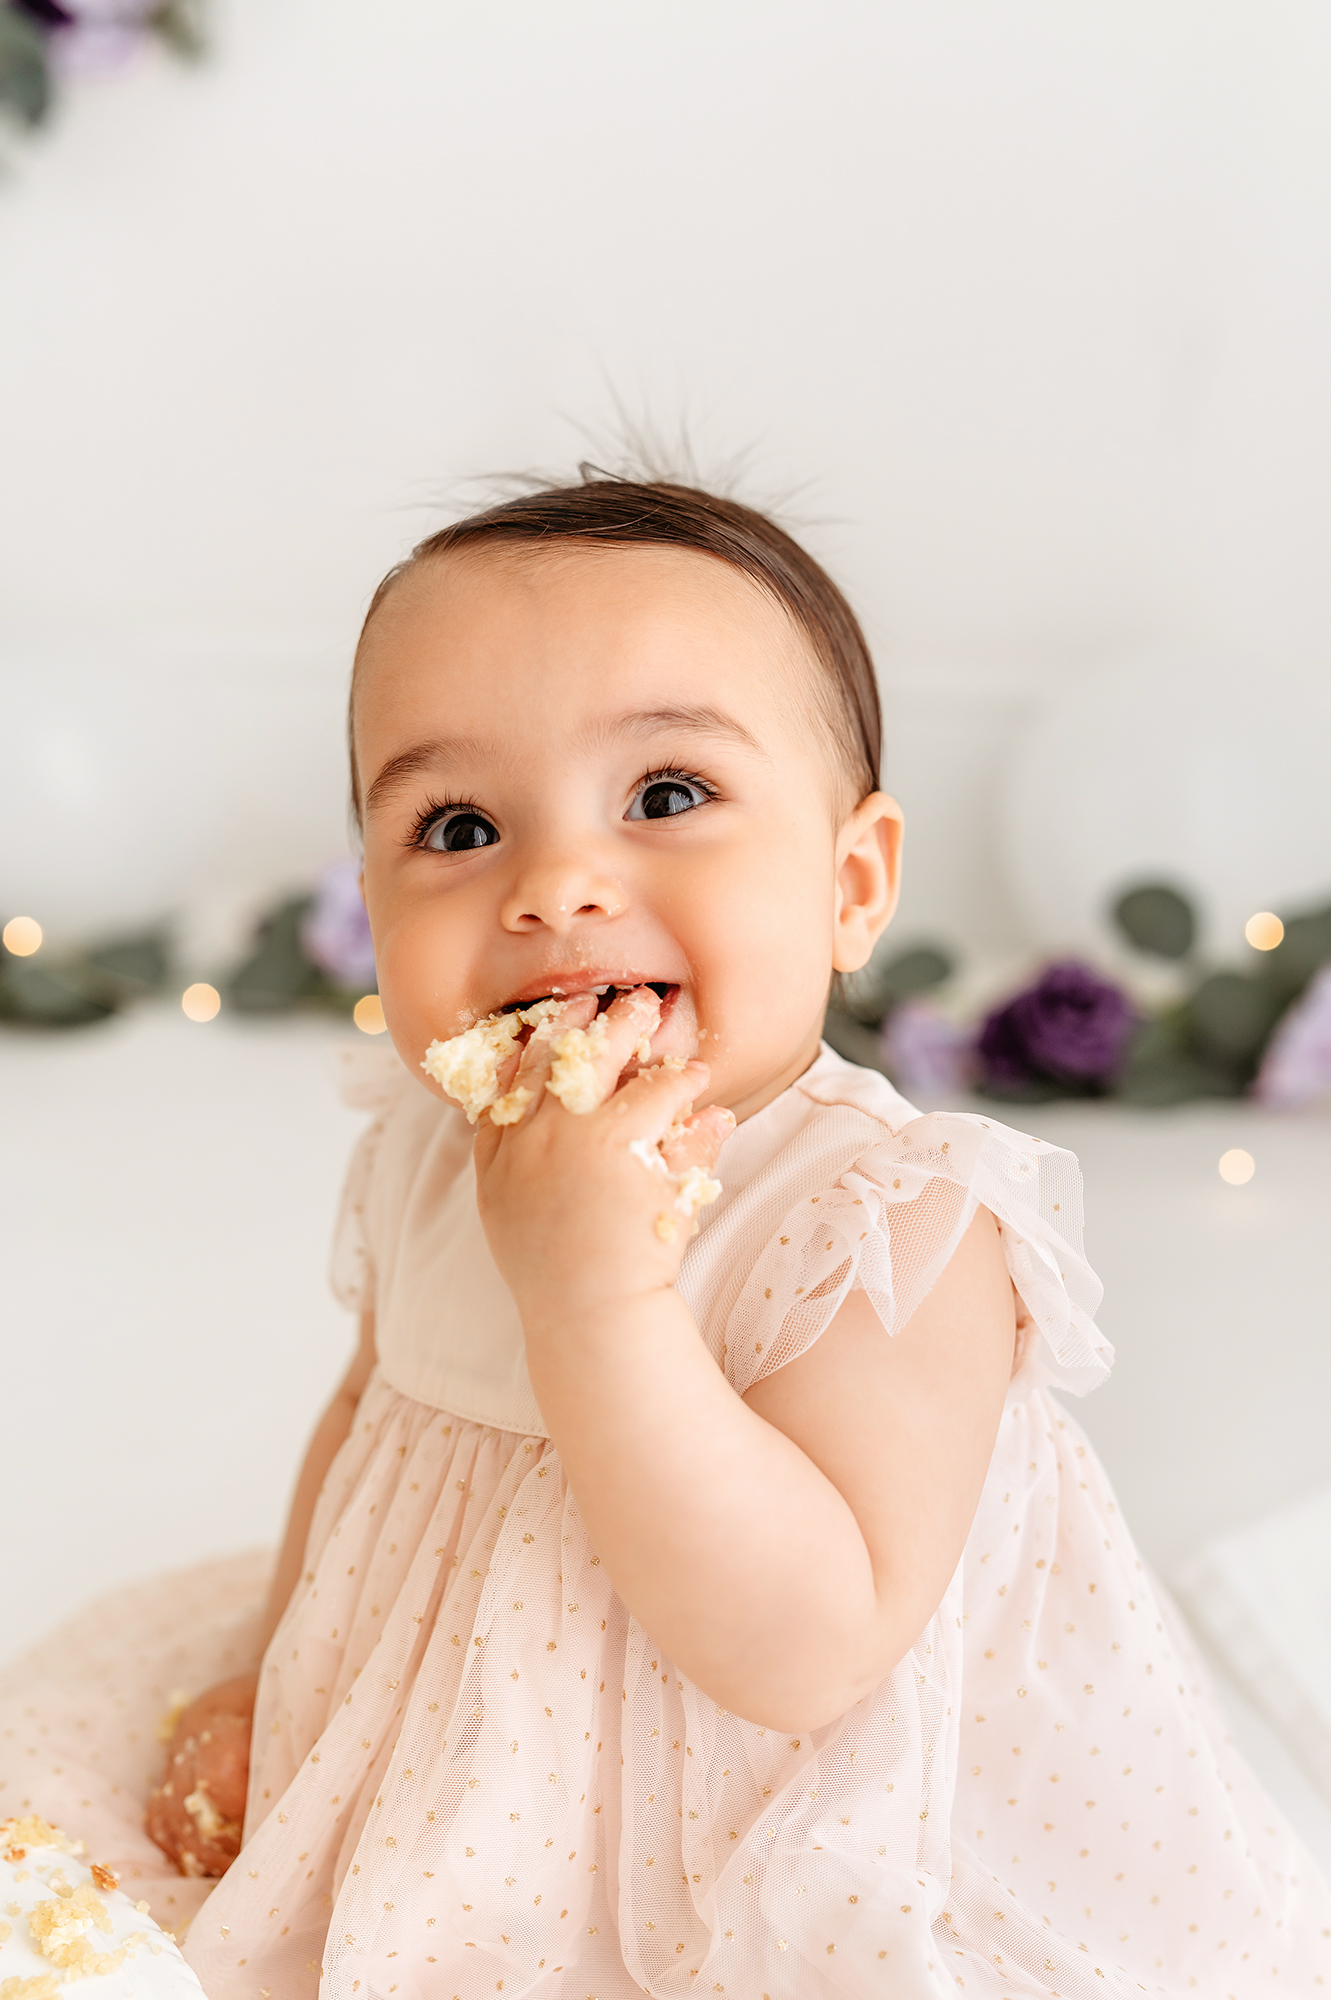 photoshoot with mamas & papas - baby girl close up of eating cake